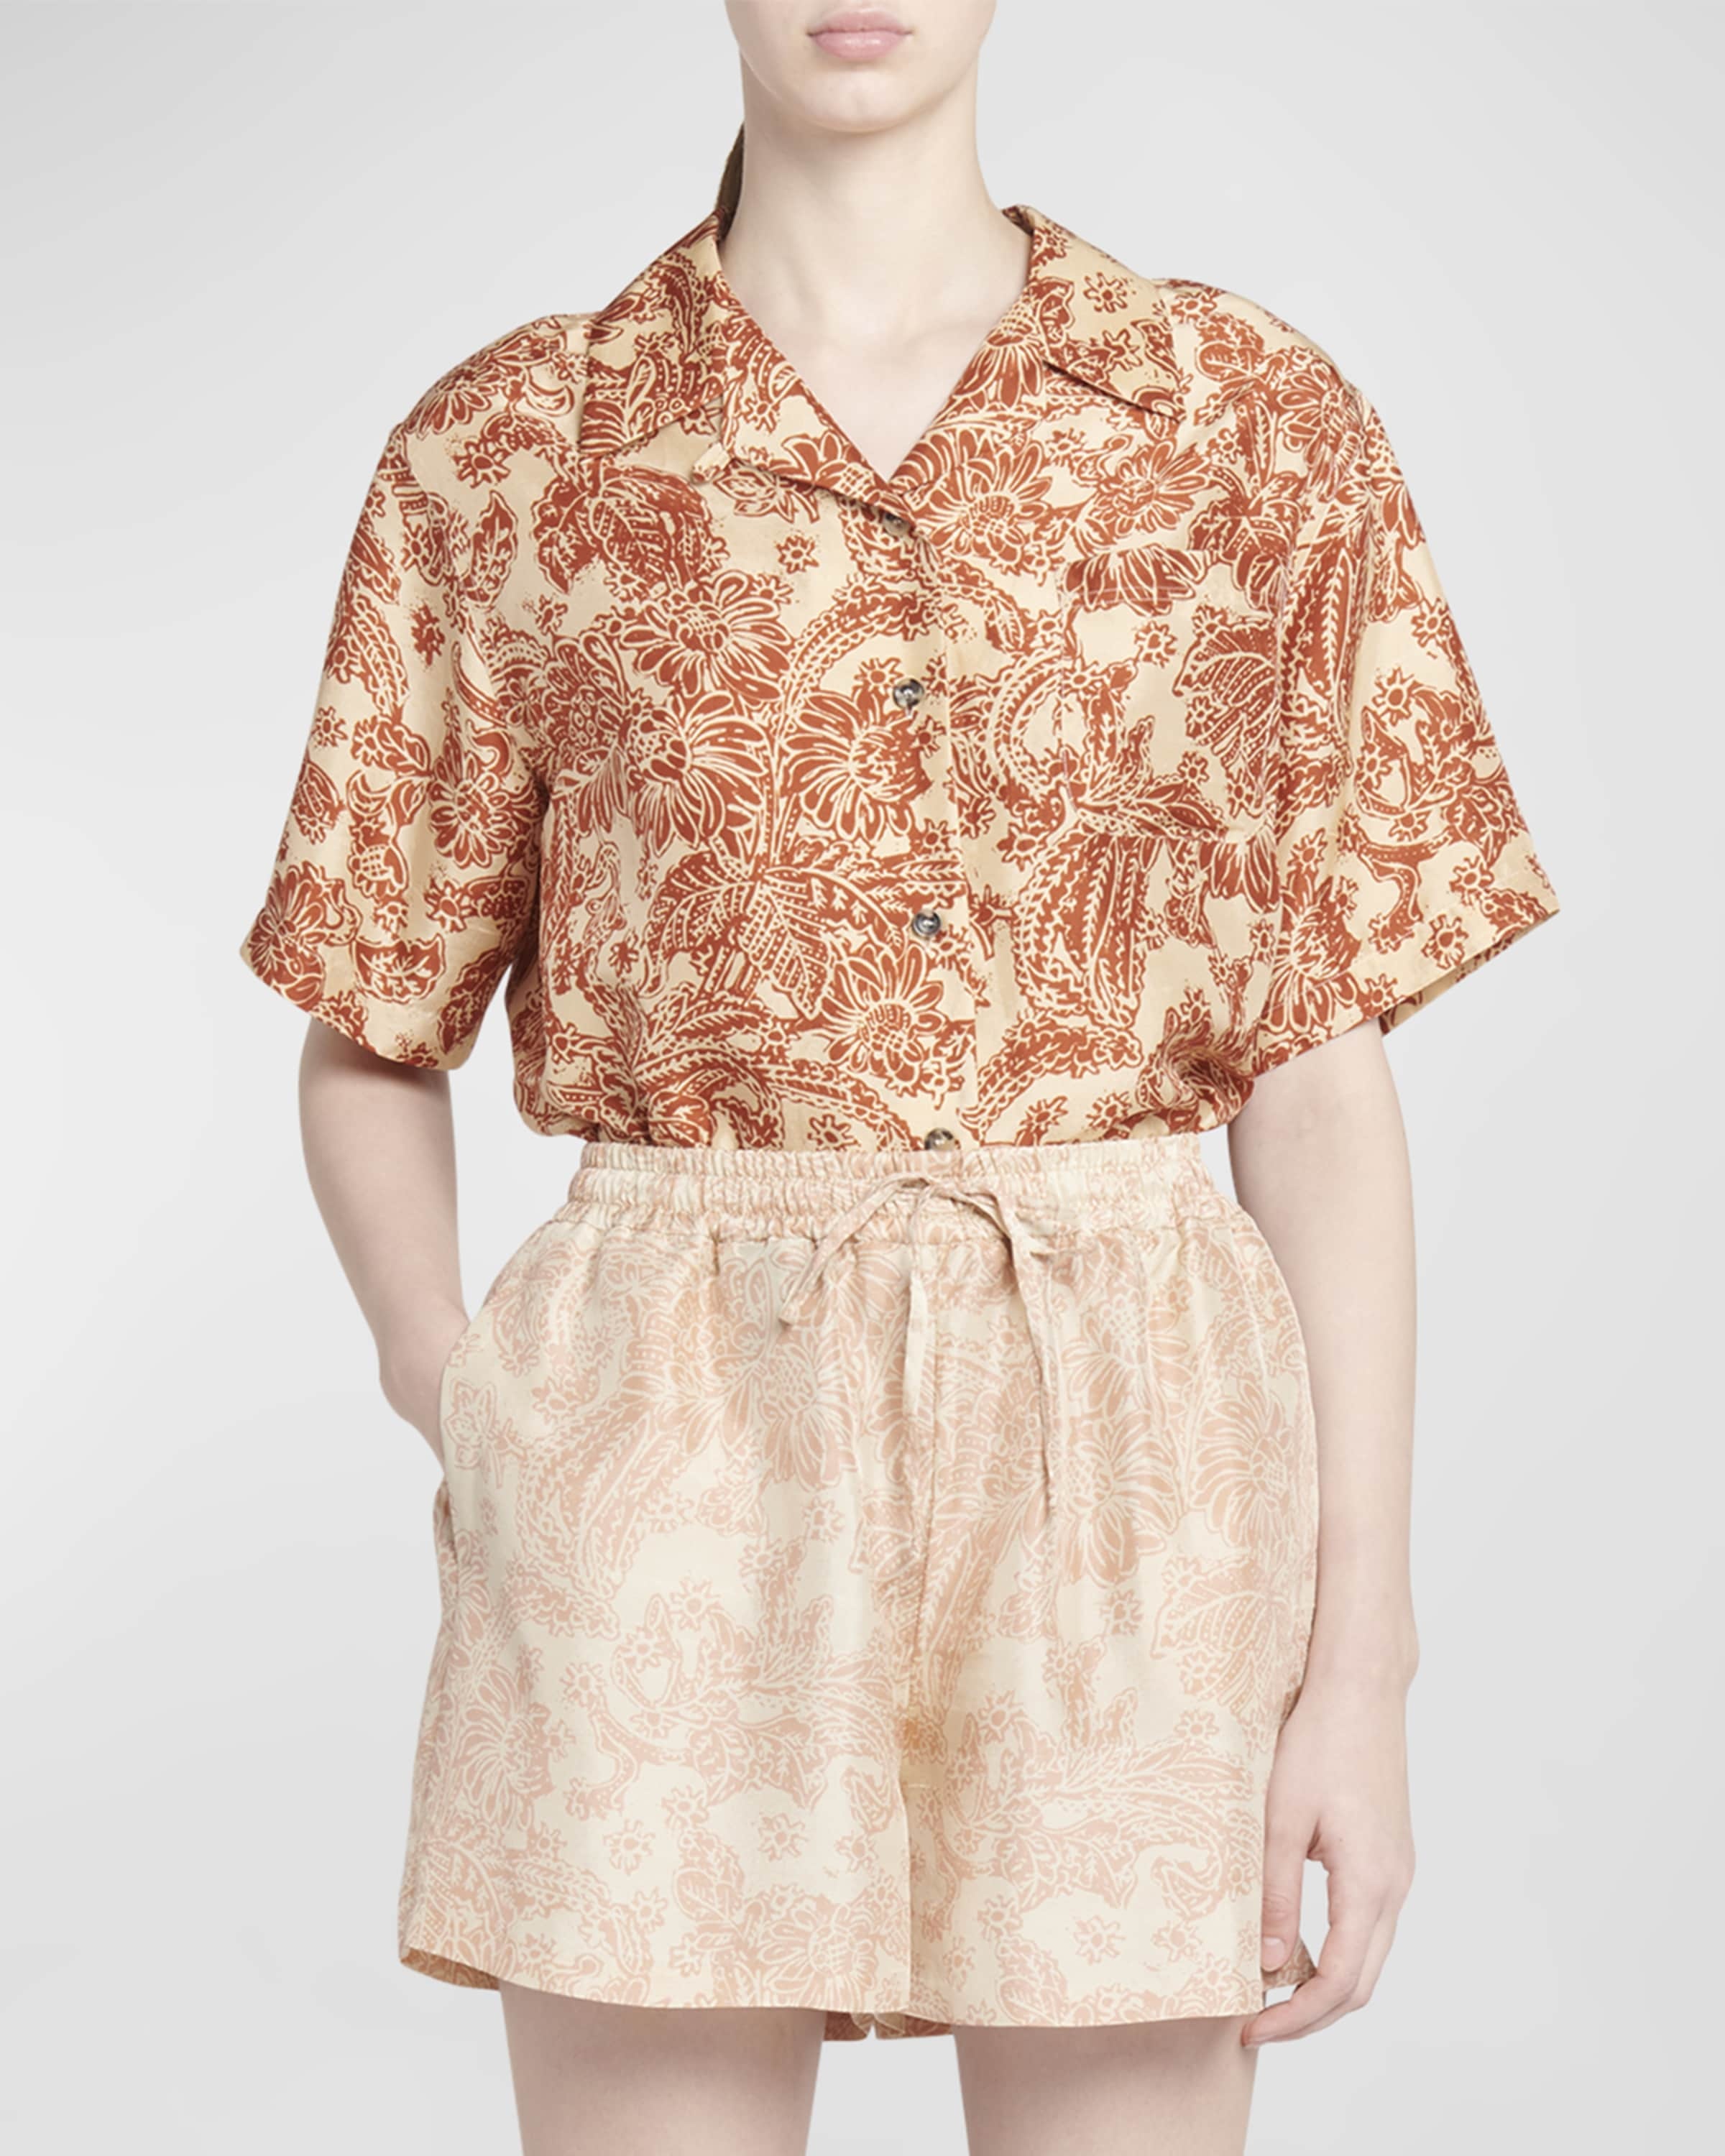 Isoble Woodblock Botanic-Print Silk Short-Sleeve Shirt - 2